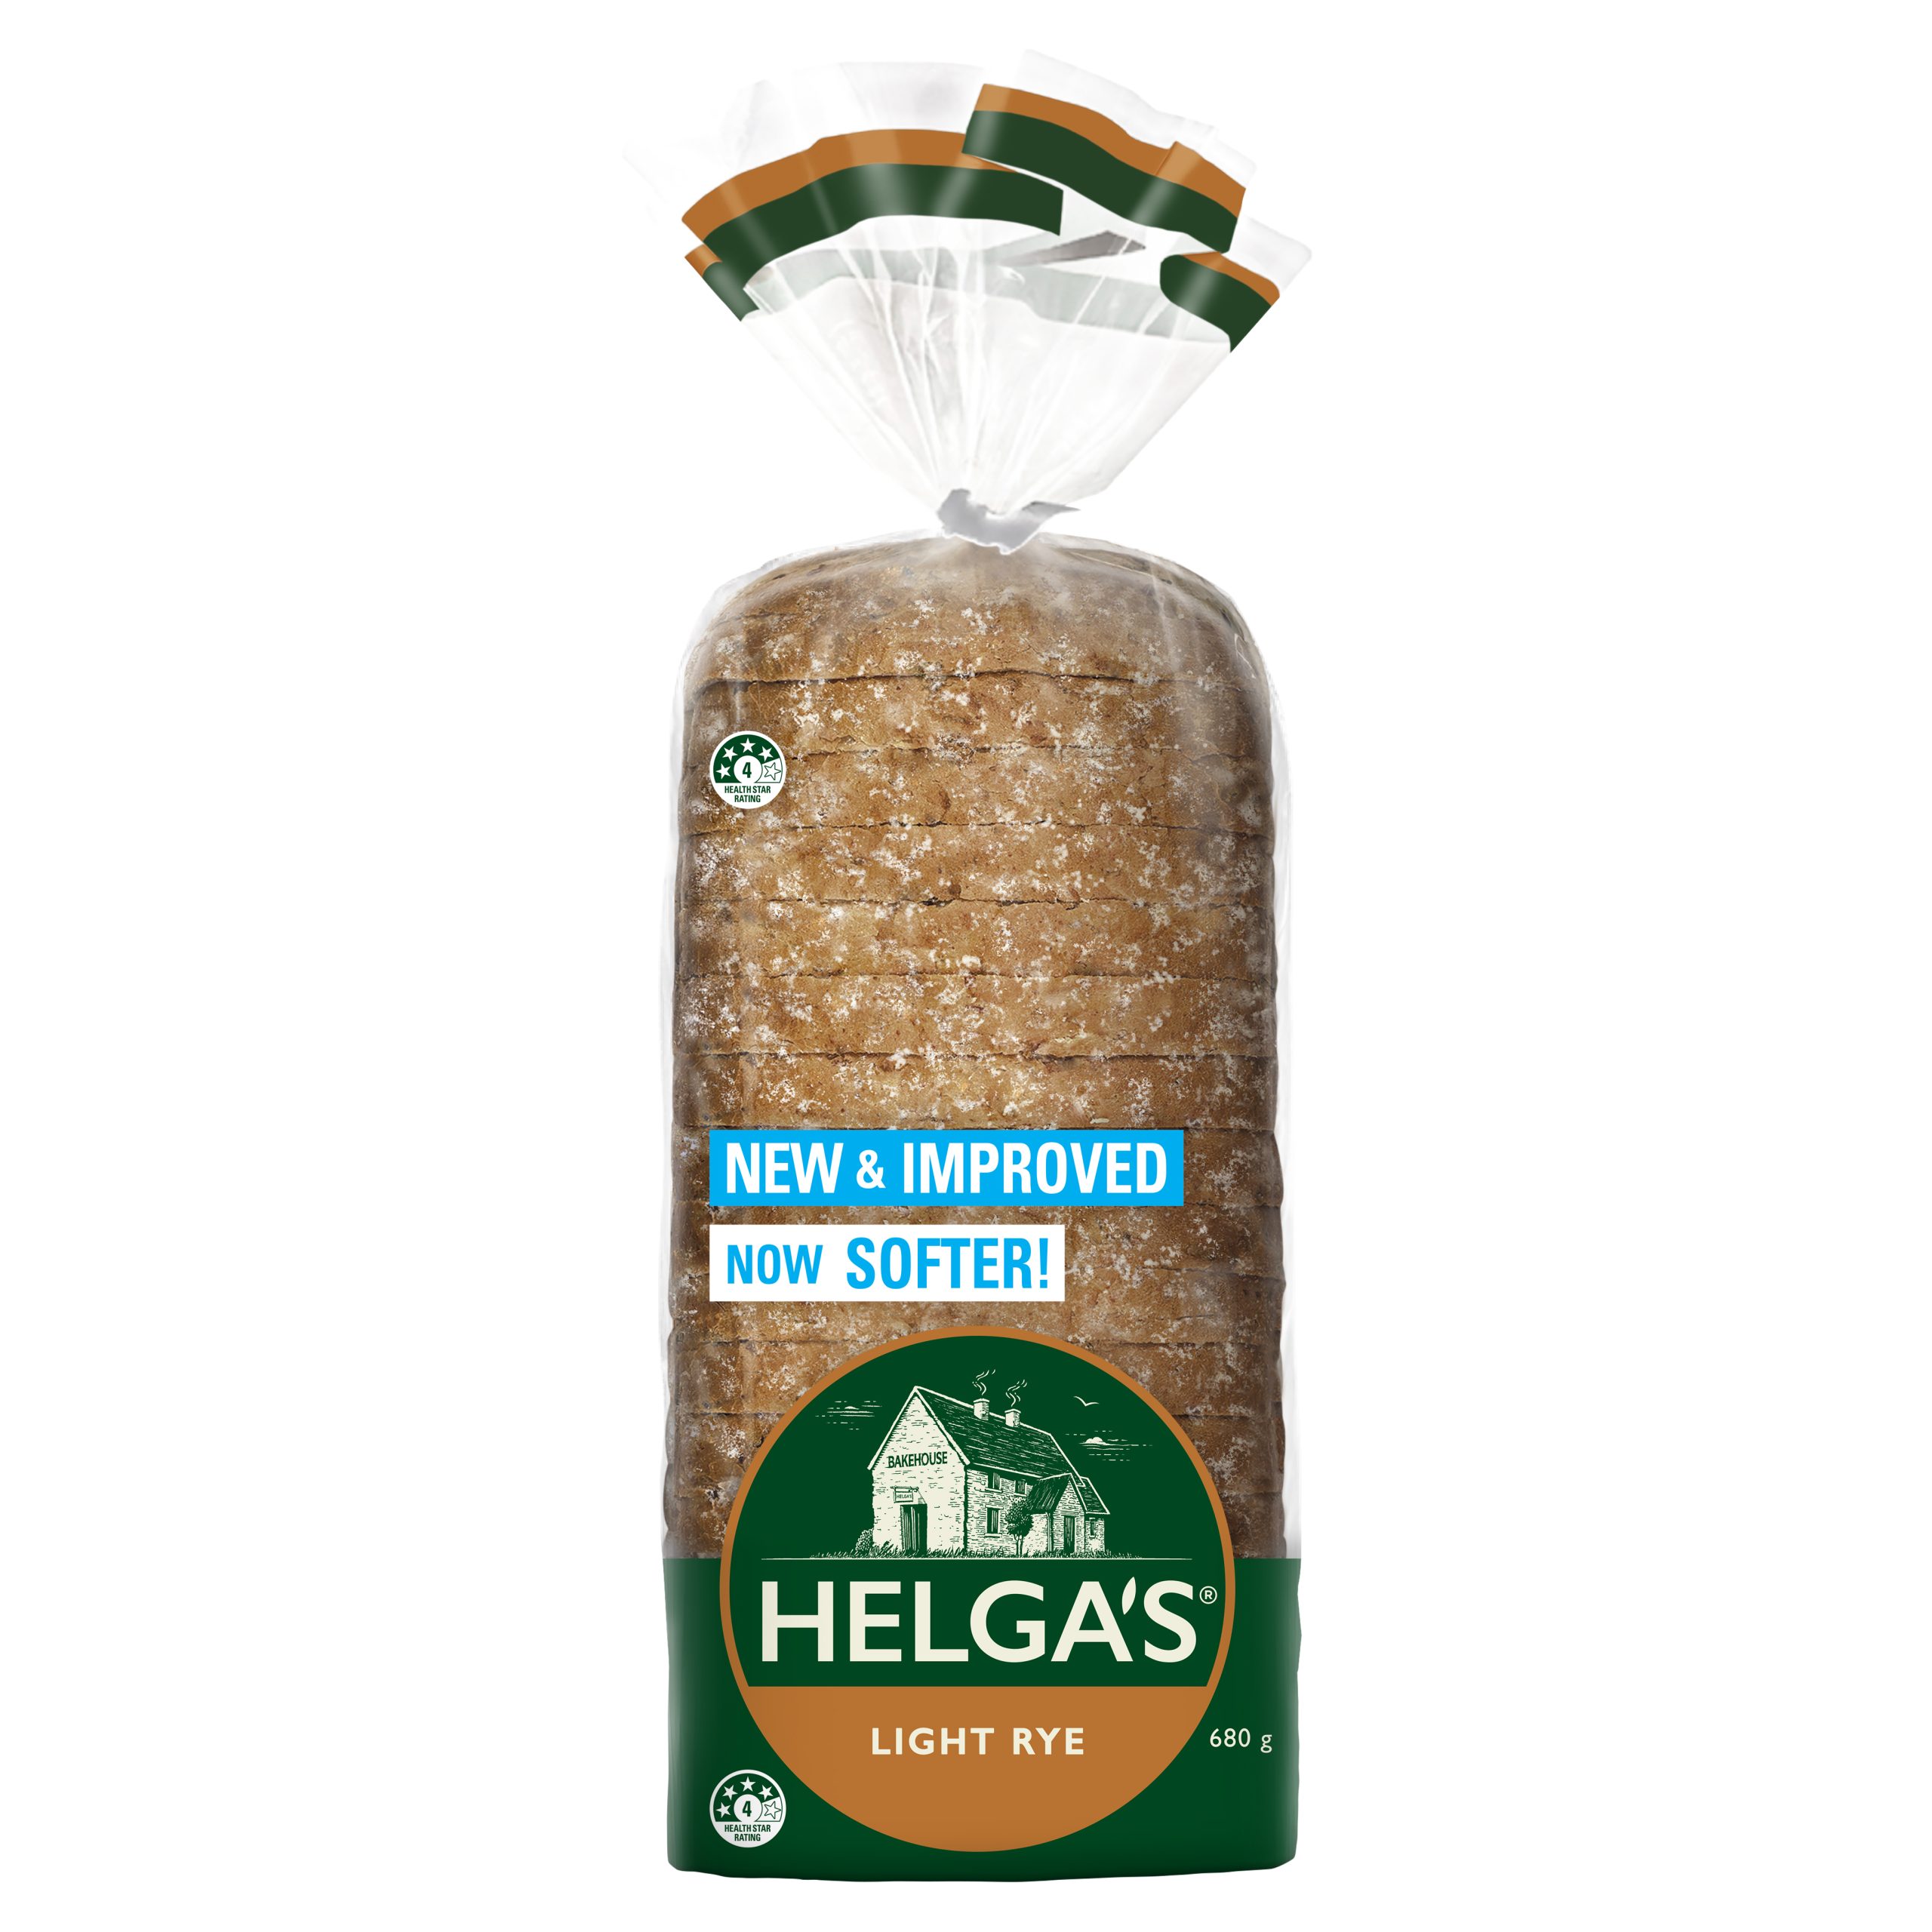 Helgas Loaf Light Rye 680 g product photo